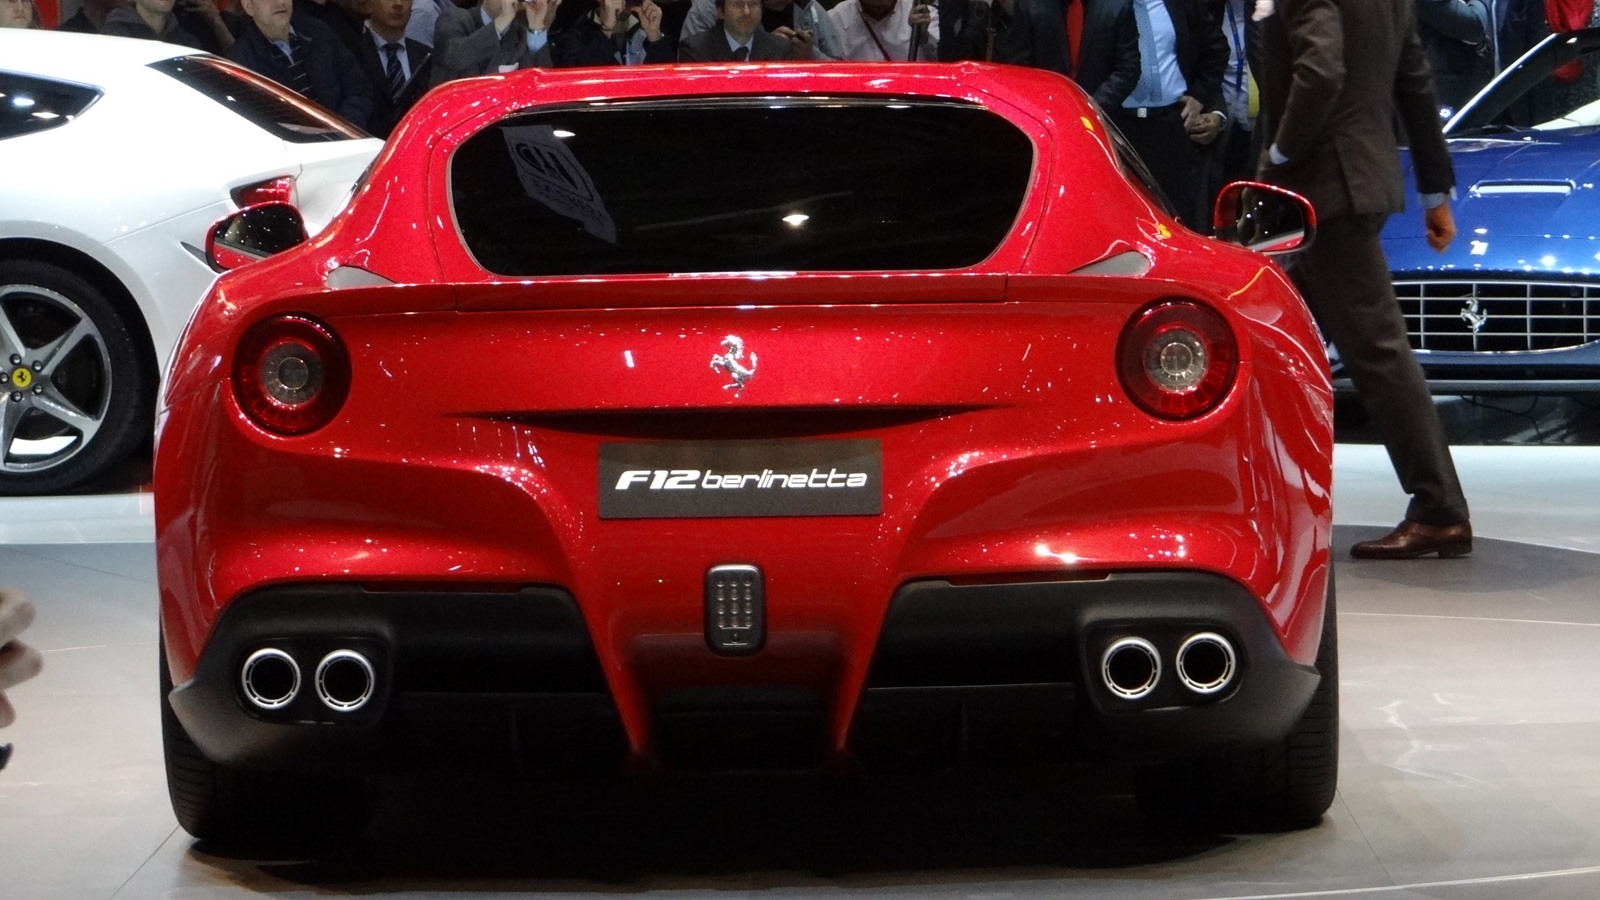 Ferrari F12 Berlinetta live photos